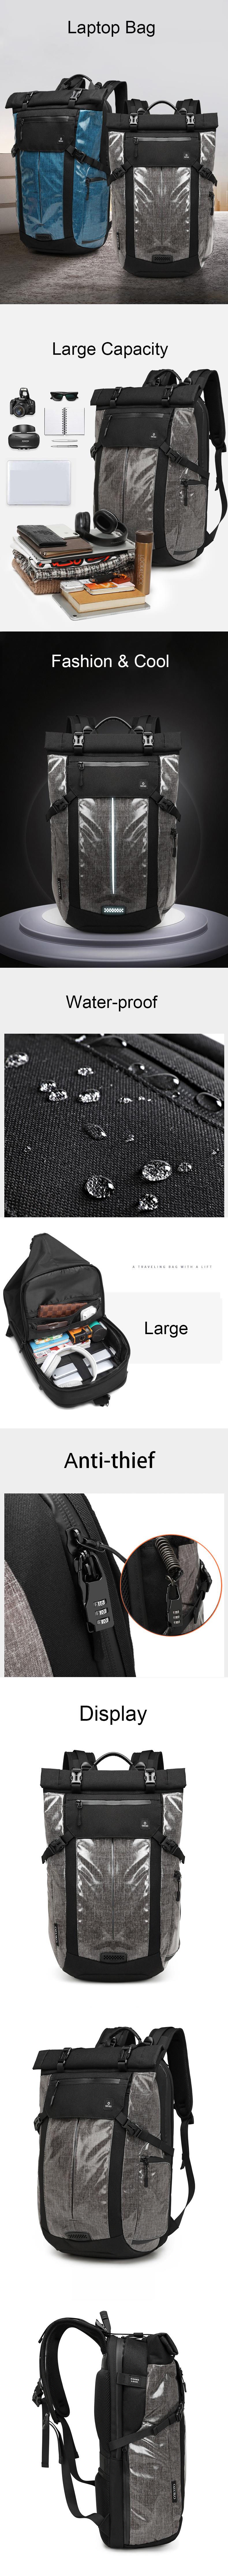 OZUKU-156-inch-Backpack-Large-Capacuty-USB-Charging-Waterproof-Fluorescent-Anti-thief-Travel-Fashion-1649584